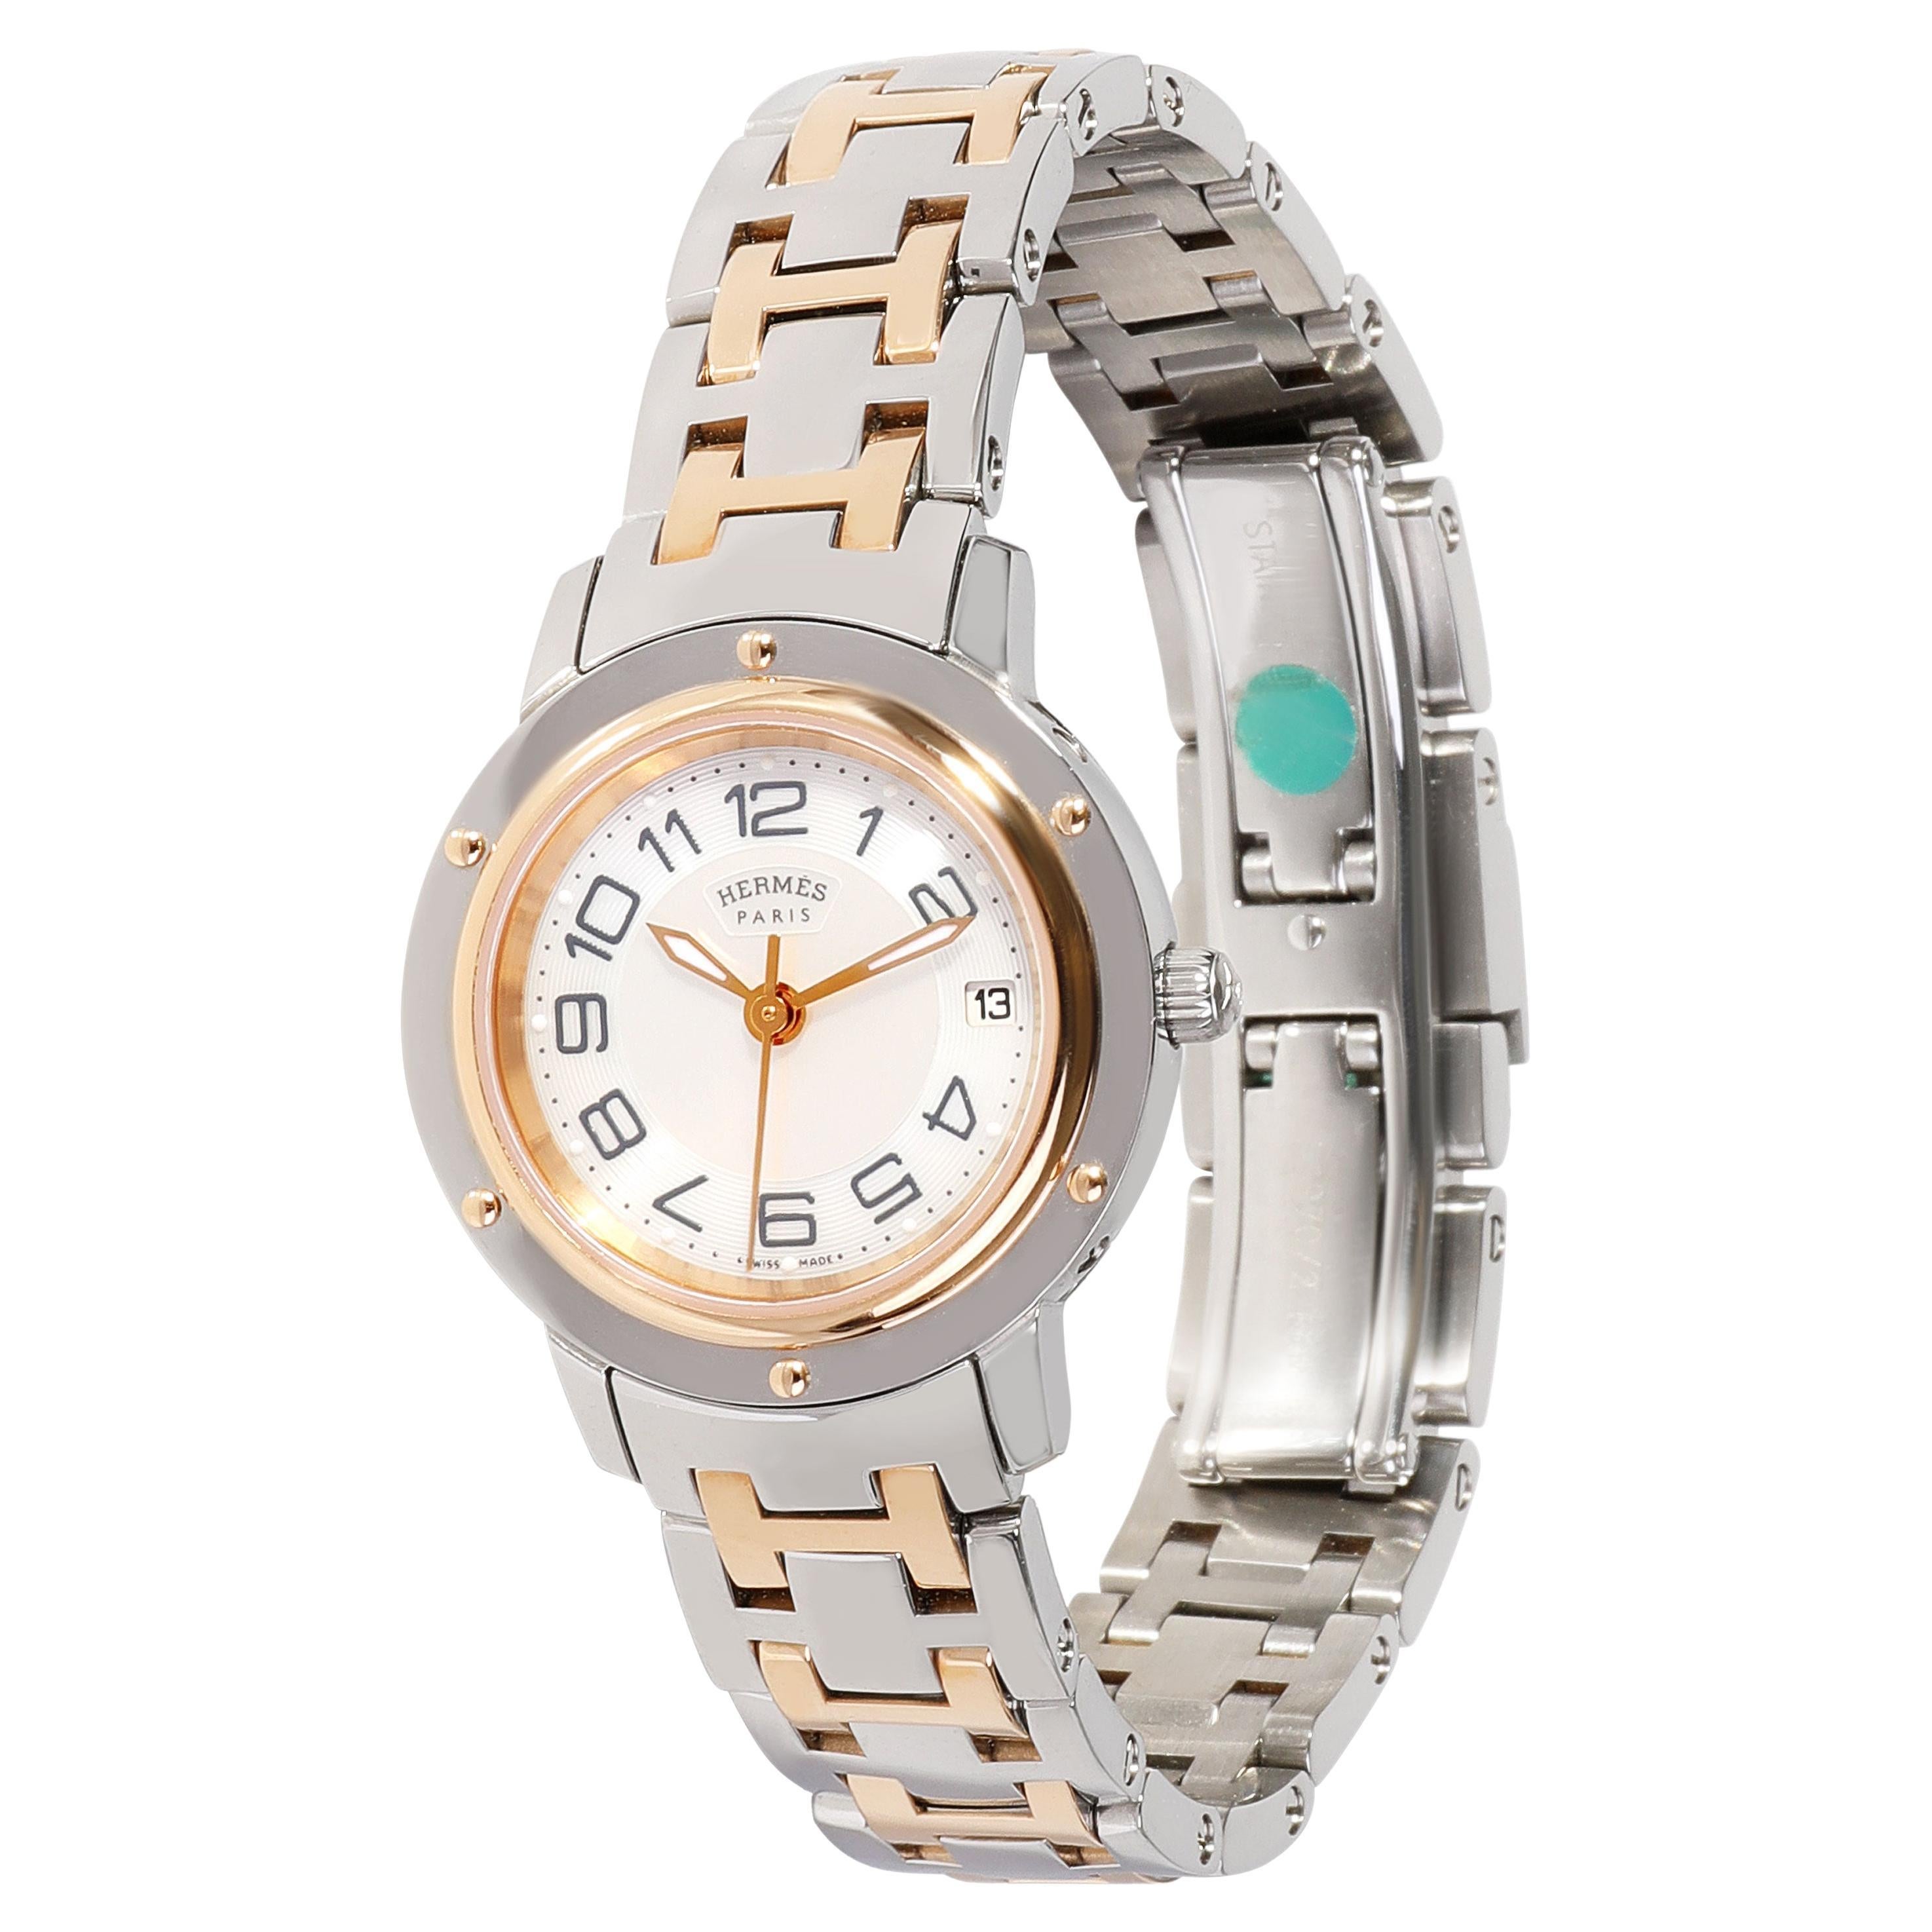 Hermès Clipper CP1.221.212.49 70 Women's Watch in 18kt Stainless Steel/Rose Gold